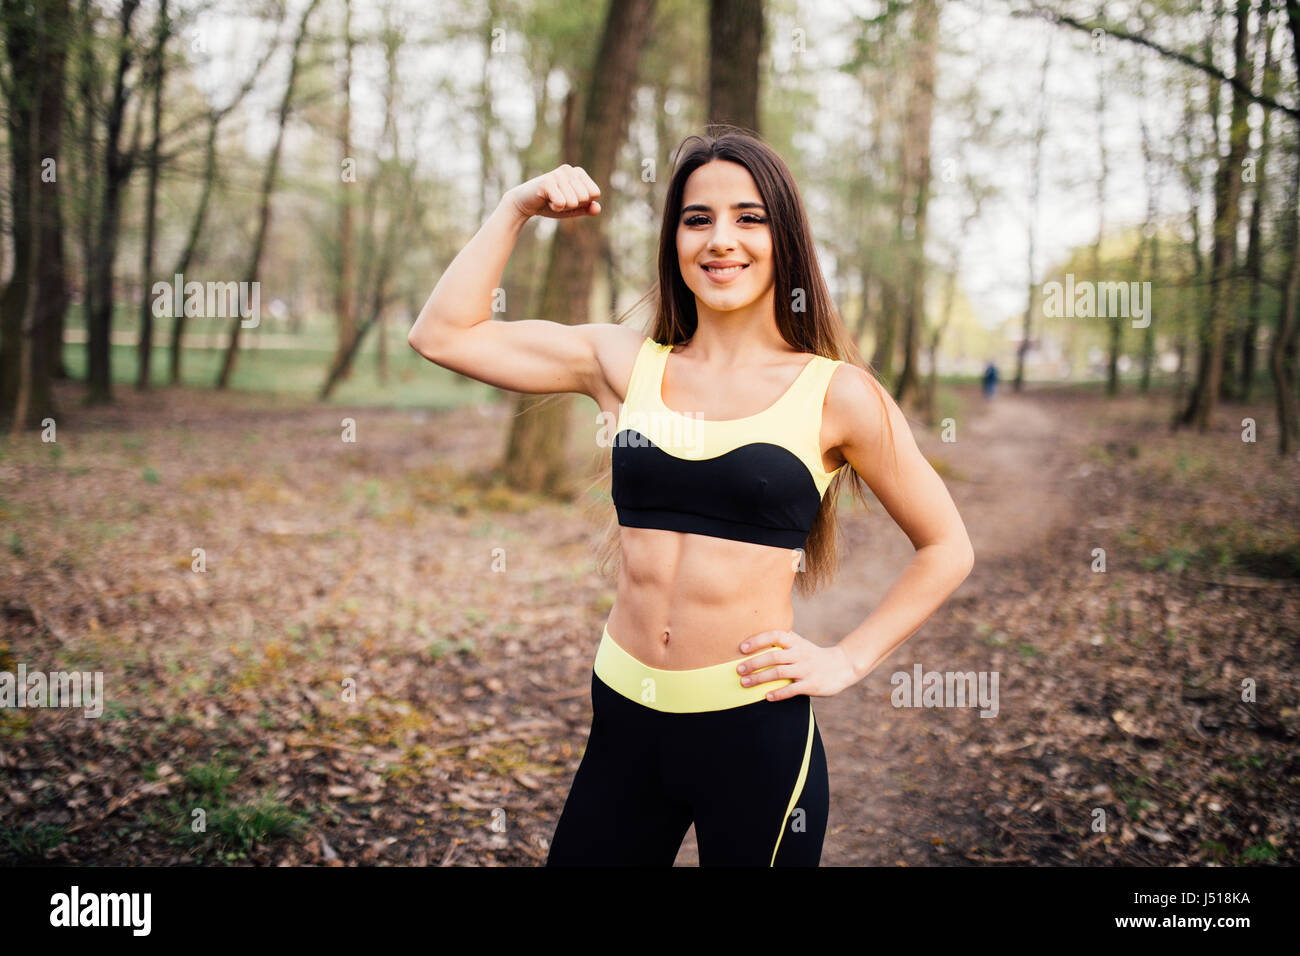 https://c8.alamy.com/comp/J518KA/beauty-fitness-girl-in-park-showing-biceps-against-park-background-J518KA.jpg